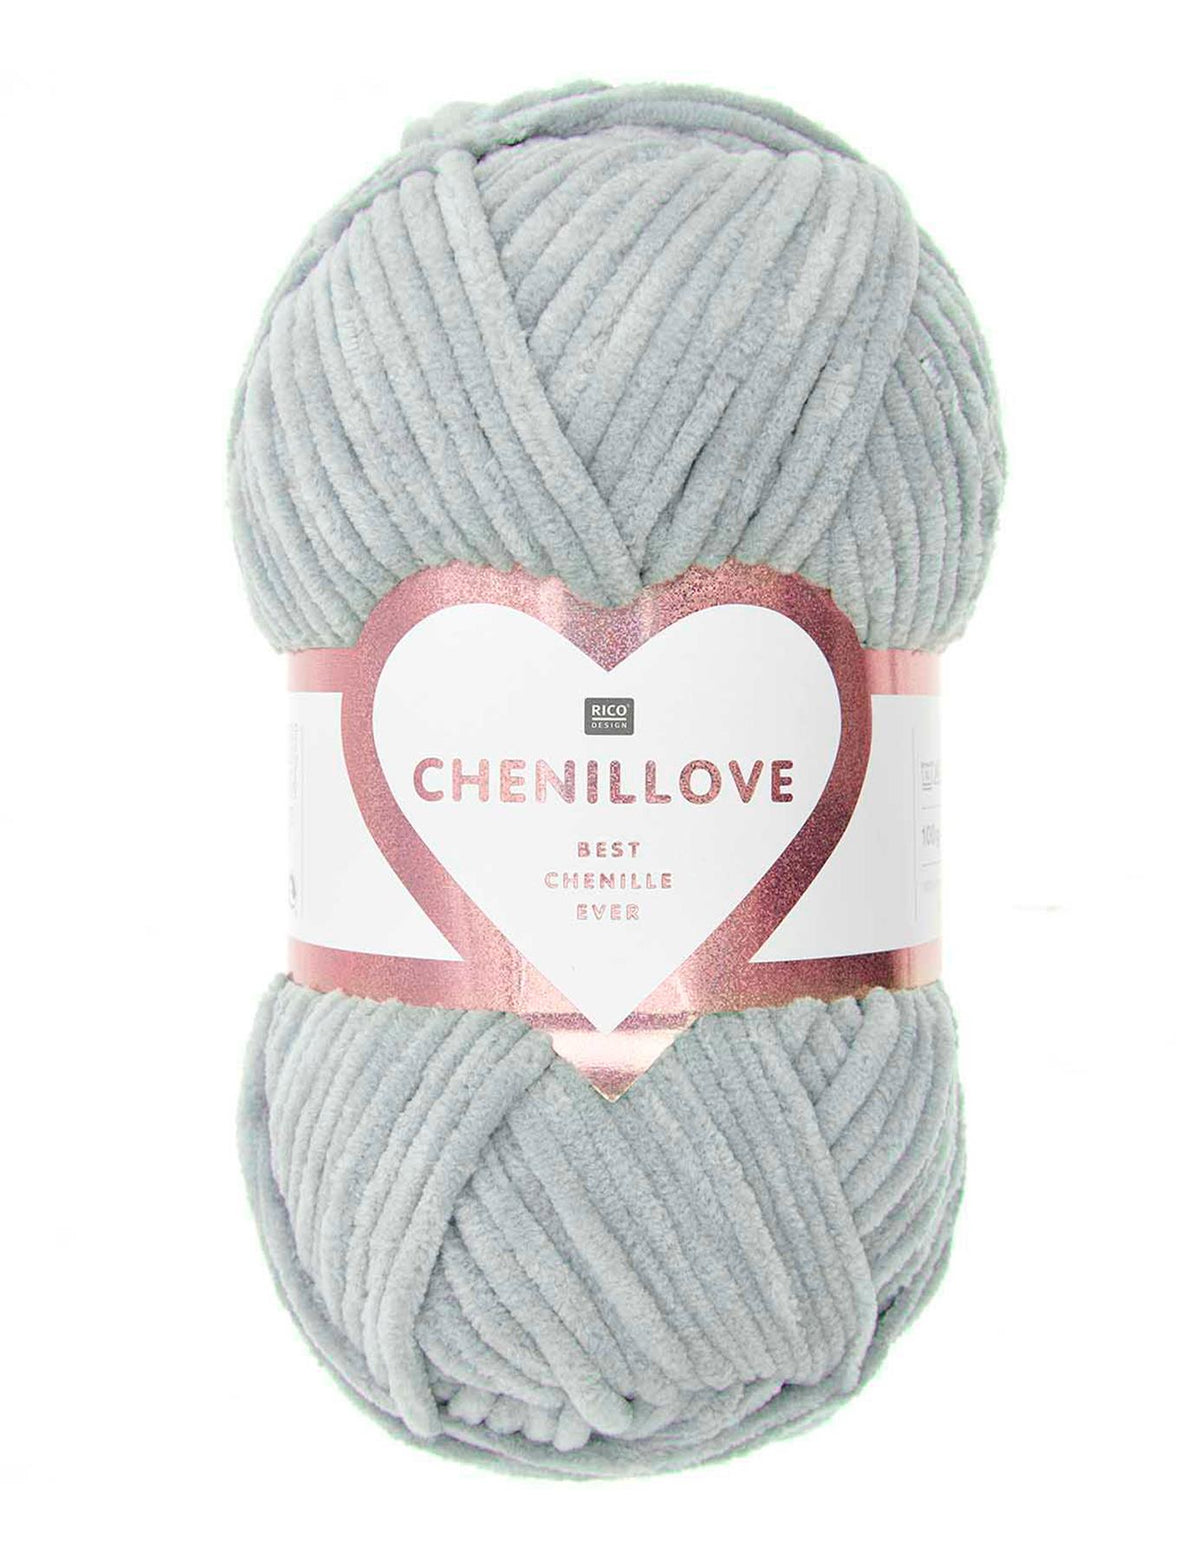 RICO Chenillove Aqua (008) chenille yarn - 100g